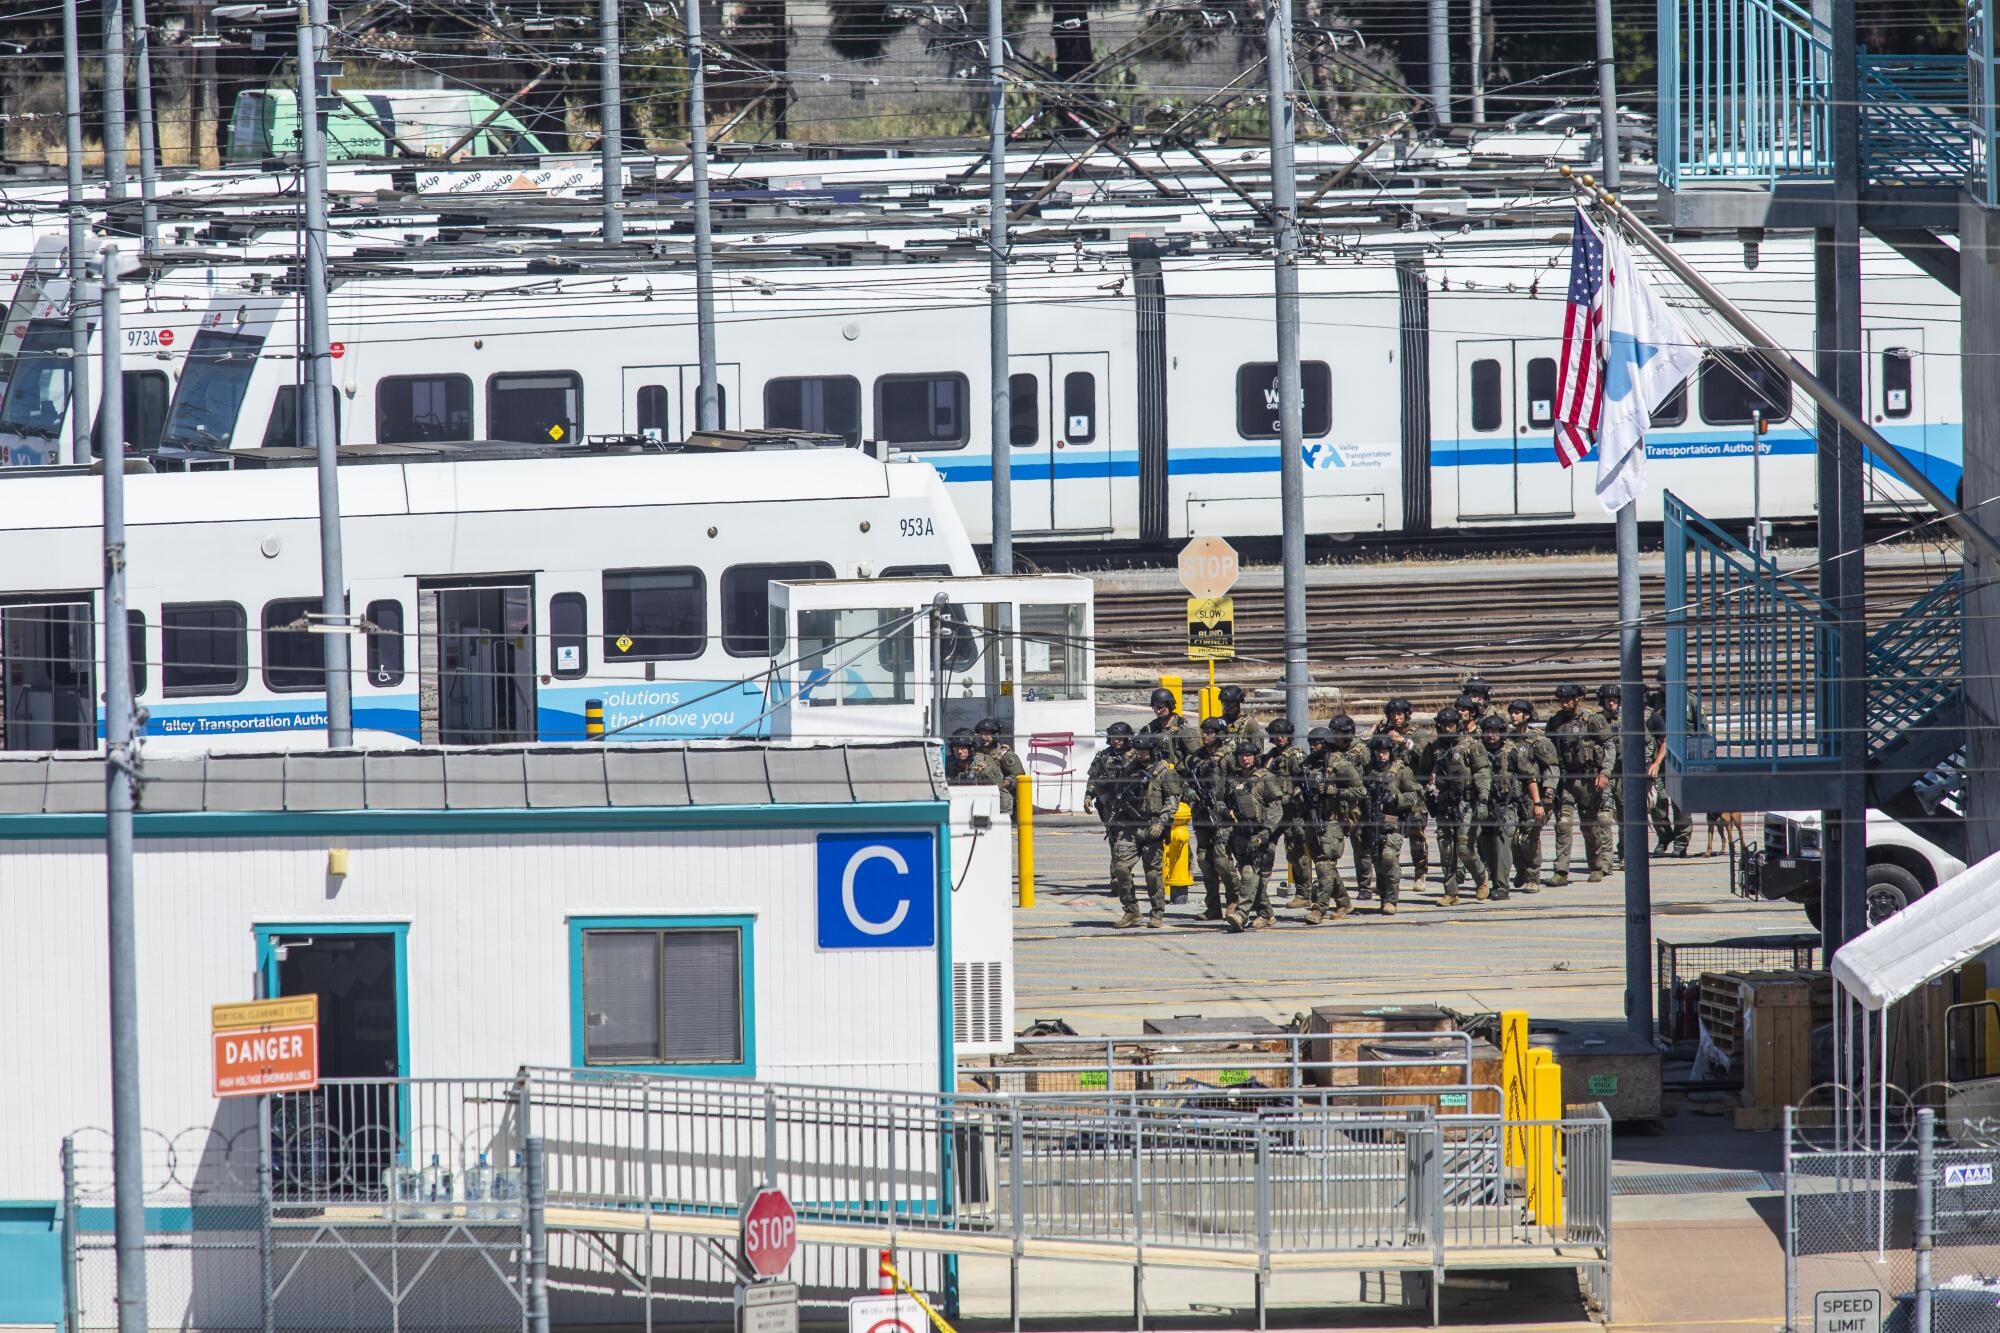 People in military uniforms walk through a rail yard.